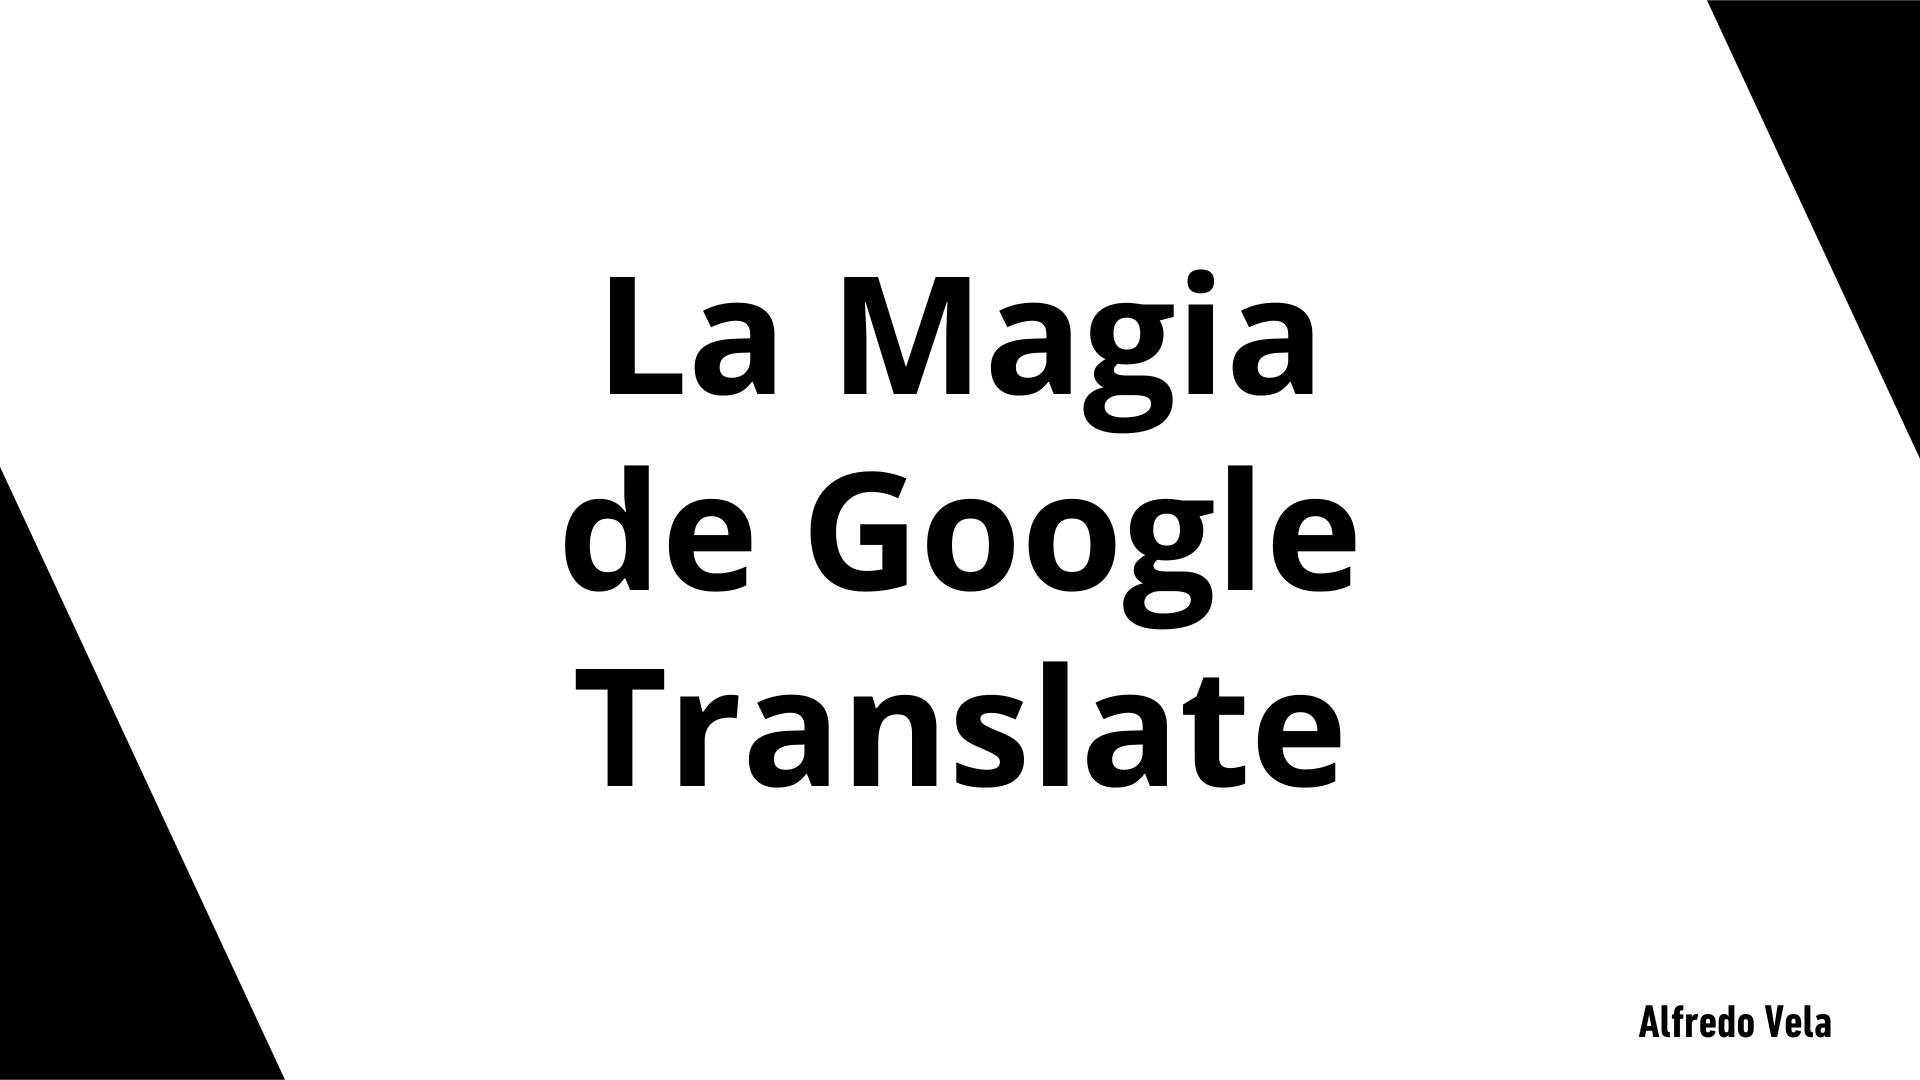 La Magia \

de Google
Translate

 

Alfredo Vela